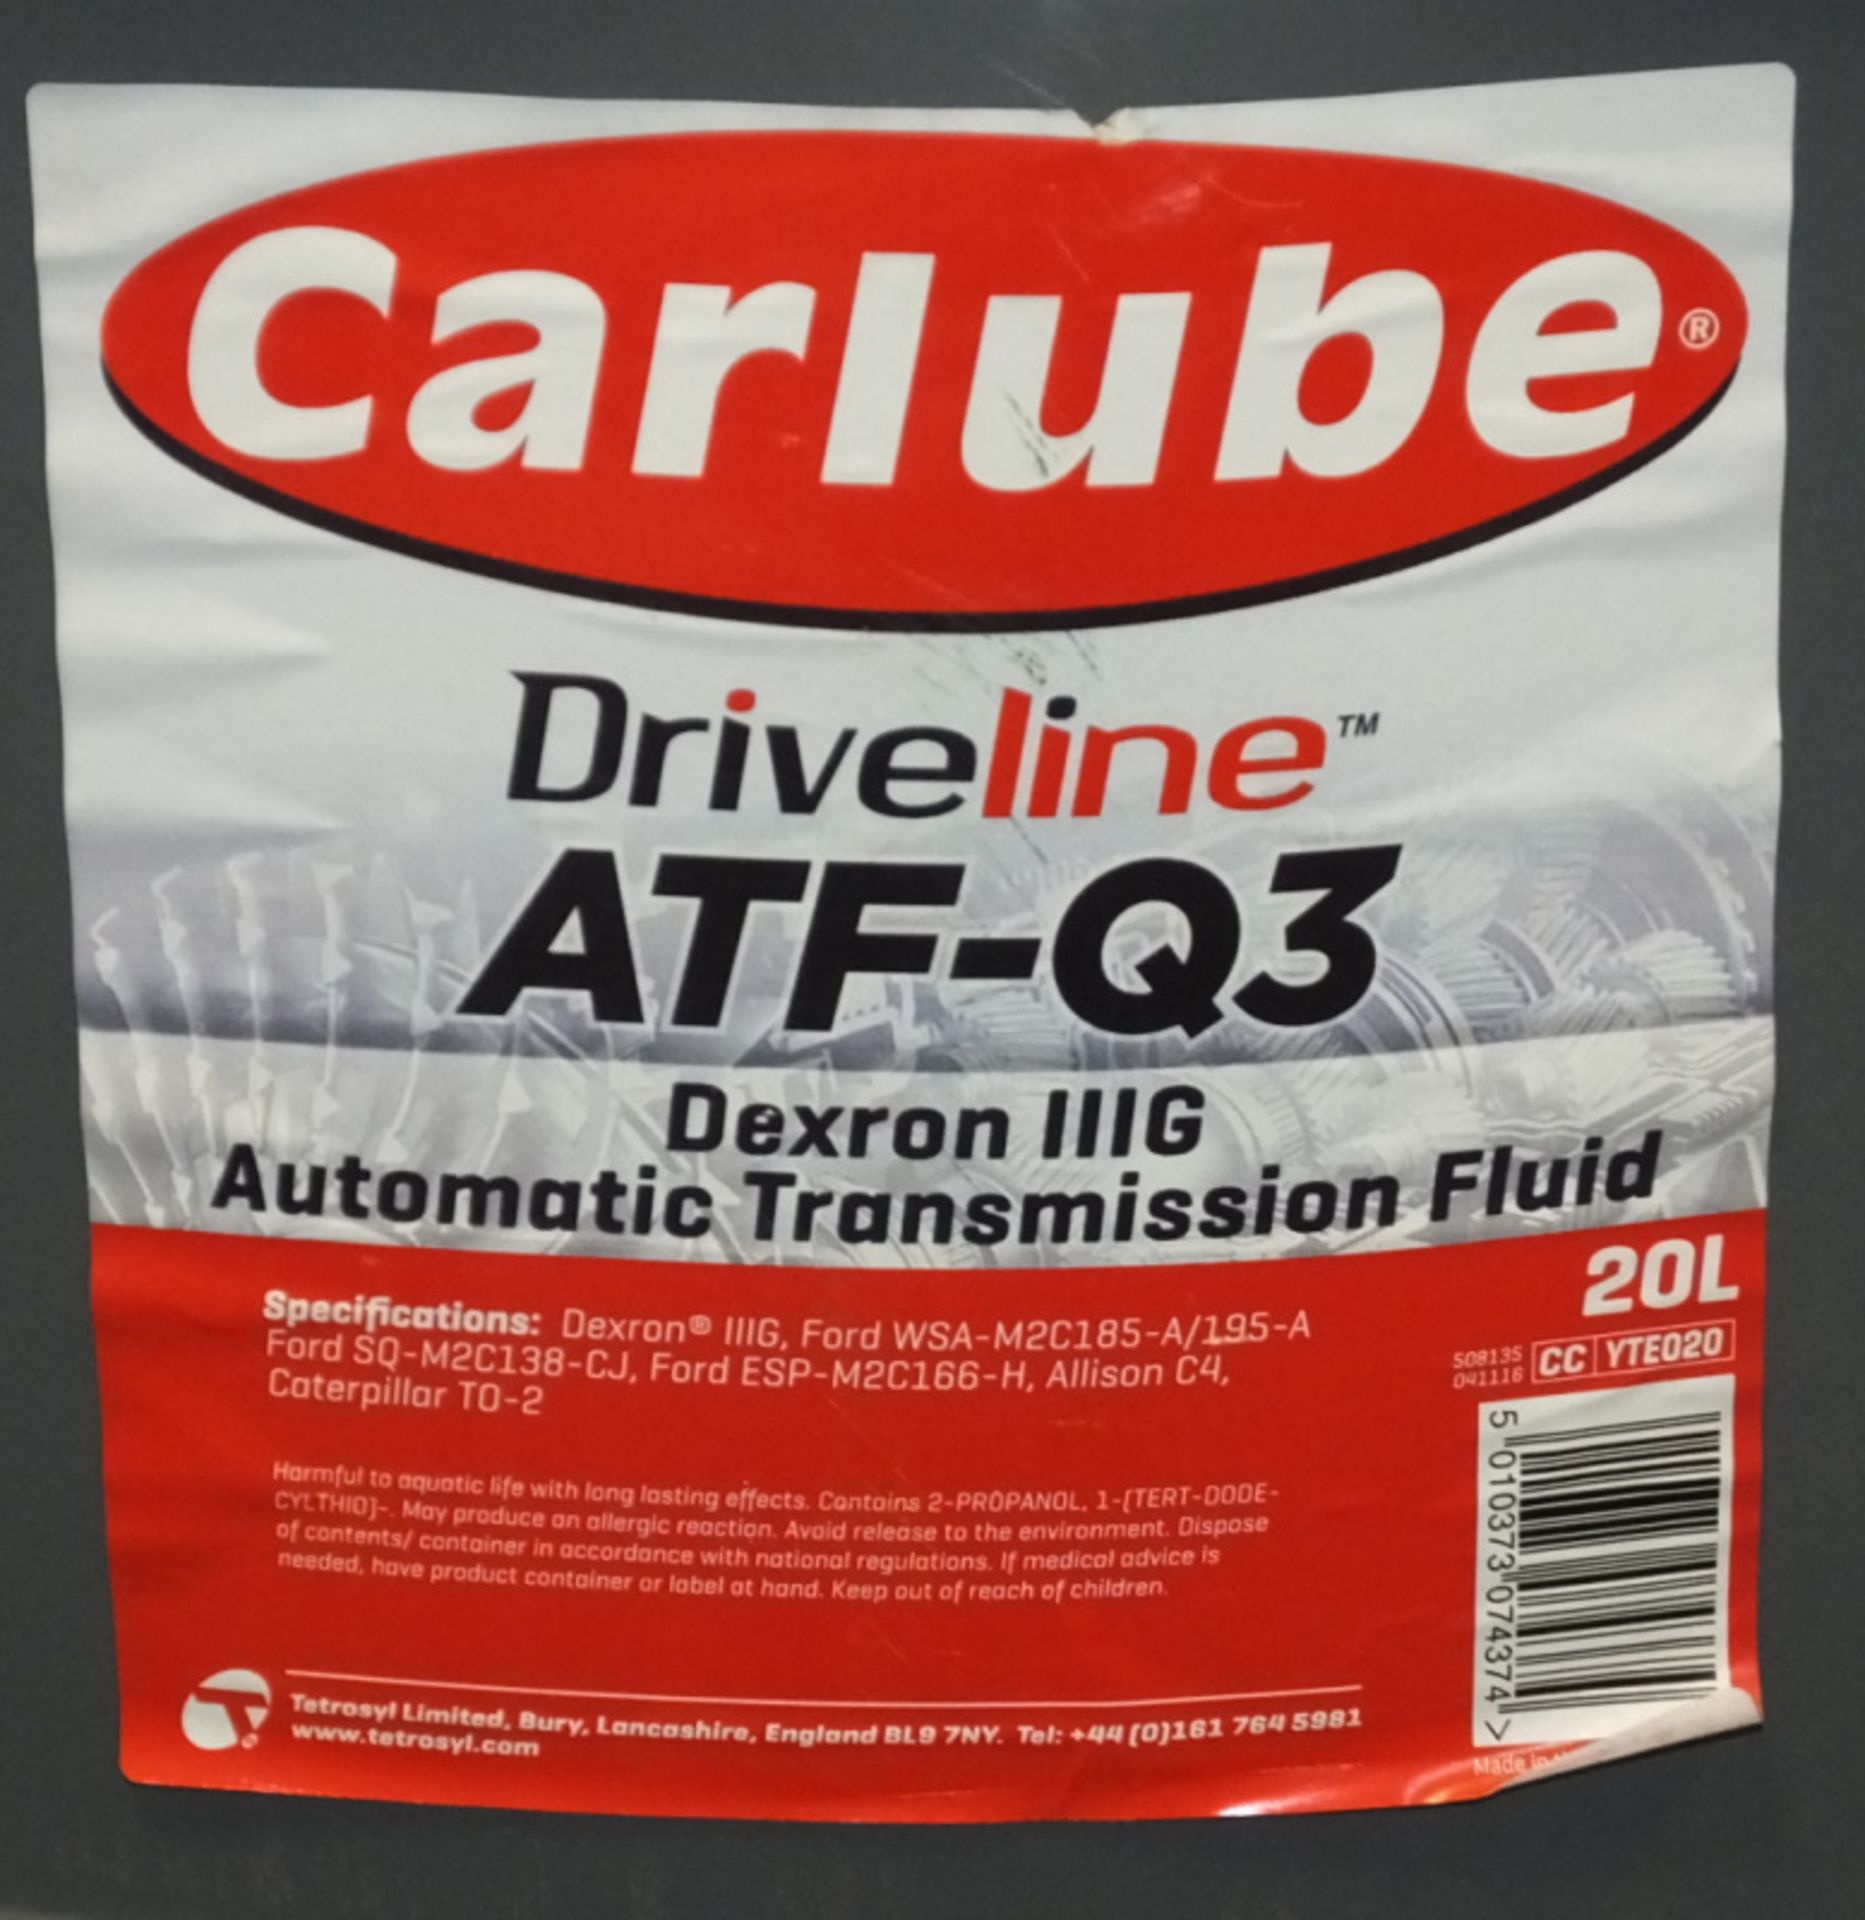 1x Carlube Driveline ATF-Q3 Automatic transmission Fluid 20L - Image 2 of 2